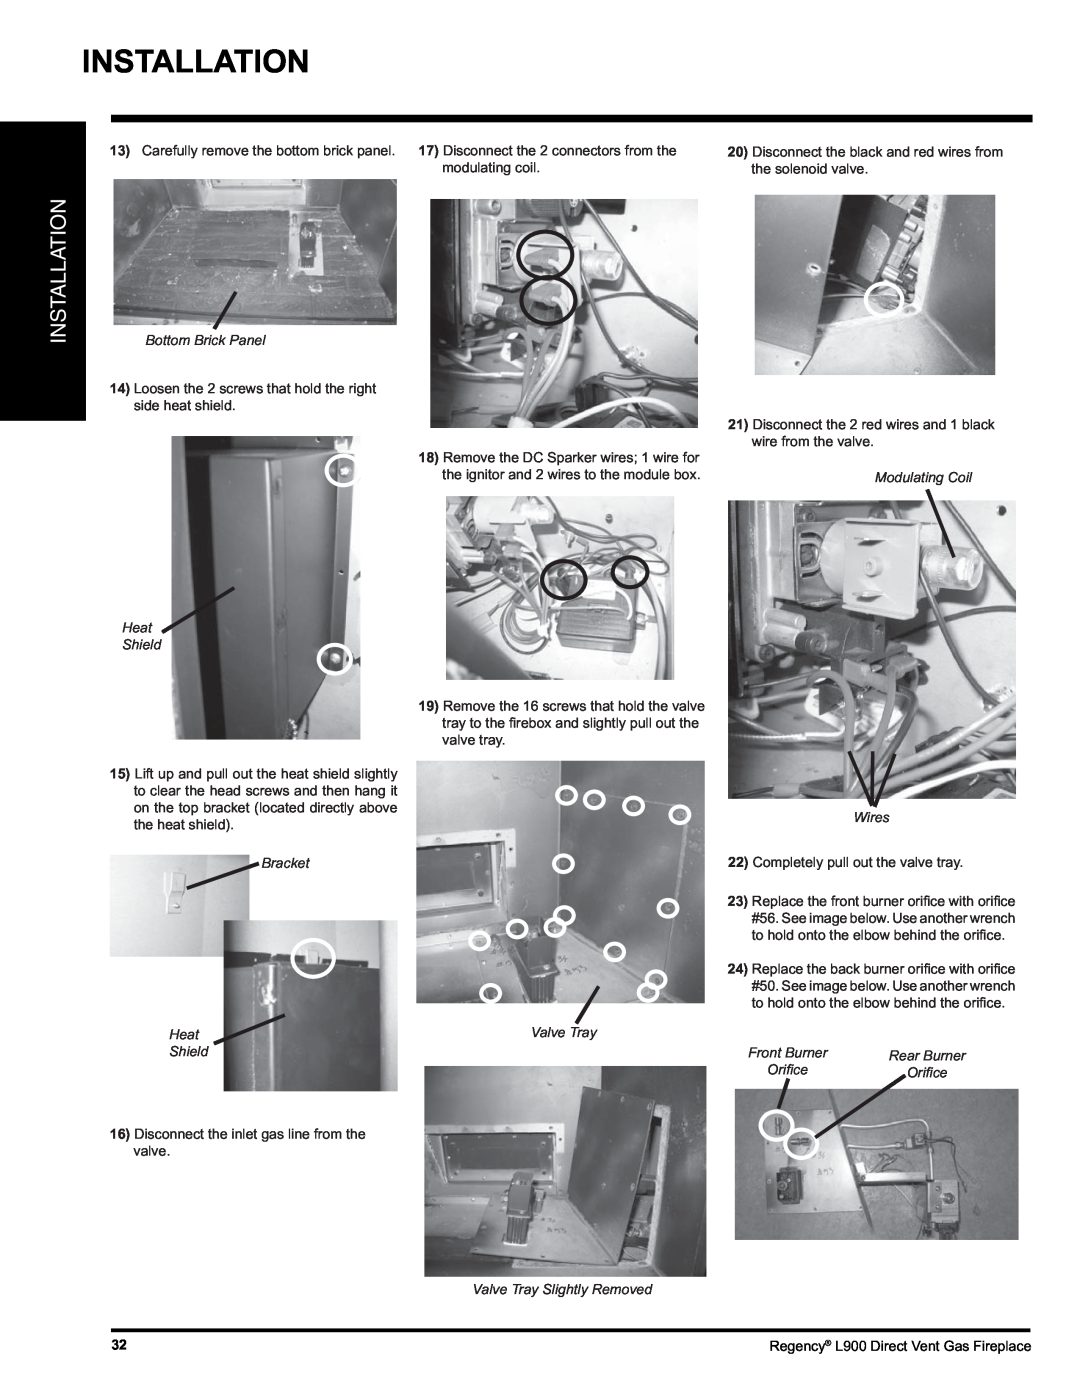 Regency L900-LP, L900-NG Installation, Bottom Brick Panel, Bracket Heat Shield, Valve Tray, Modulating Coil Wires 